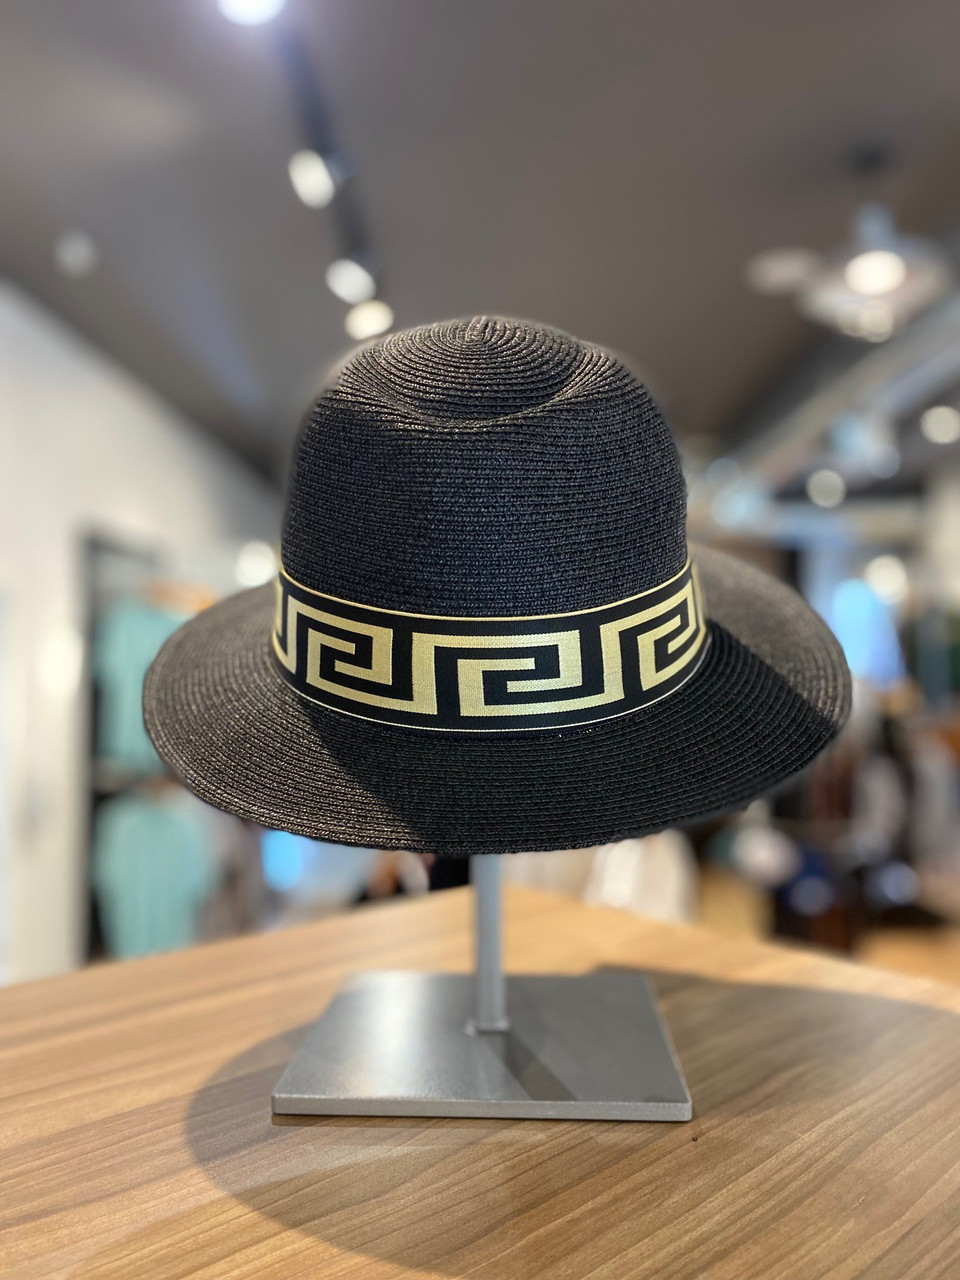 Louis Vuitton inspired black hat  Black fedora hat, Black fedora, Hats